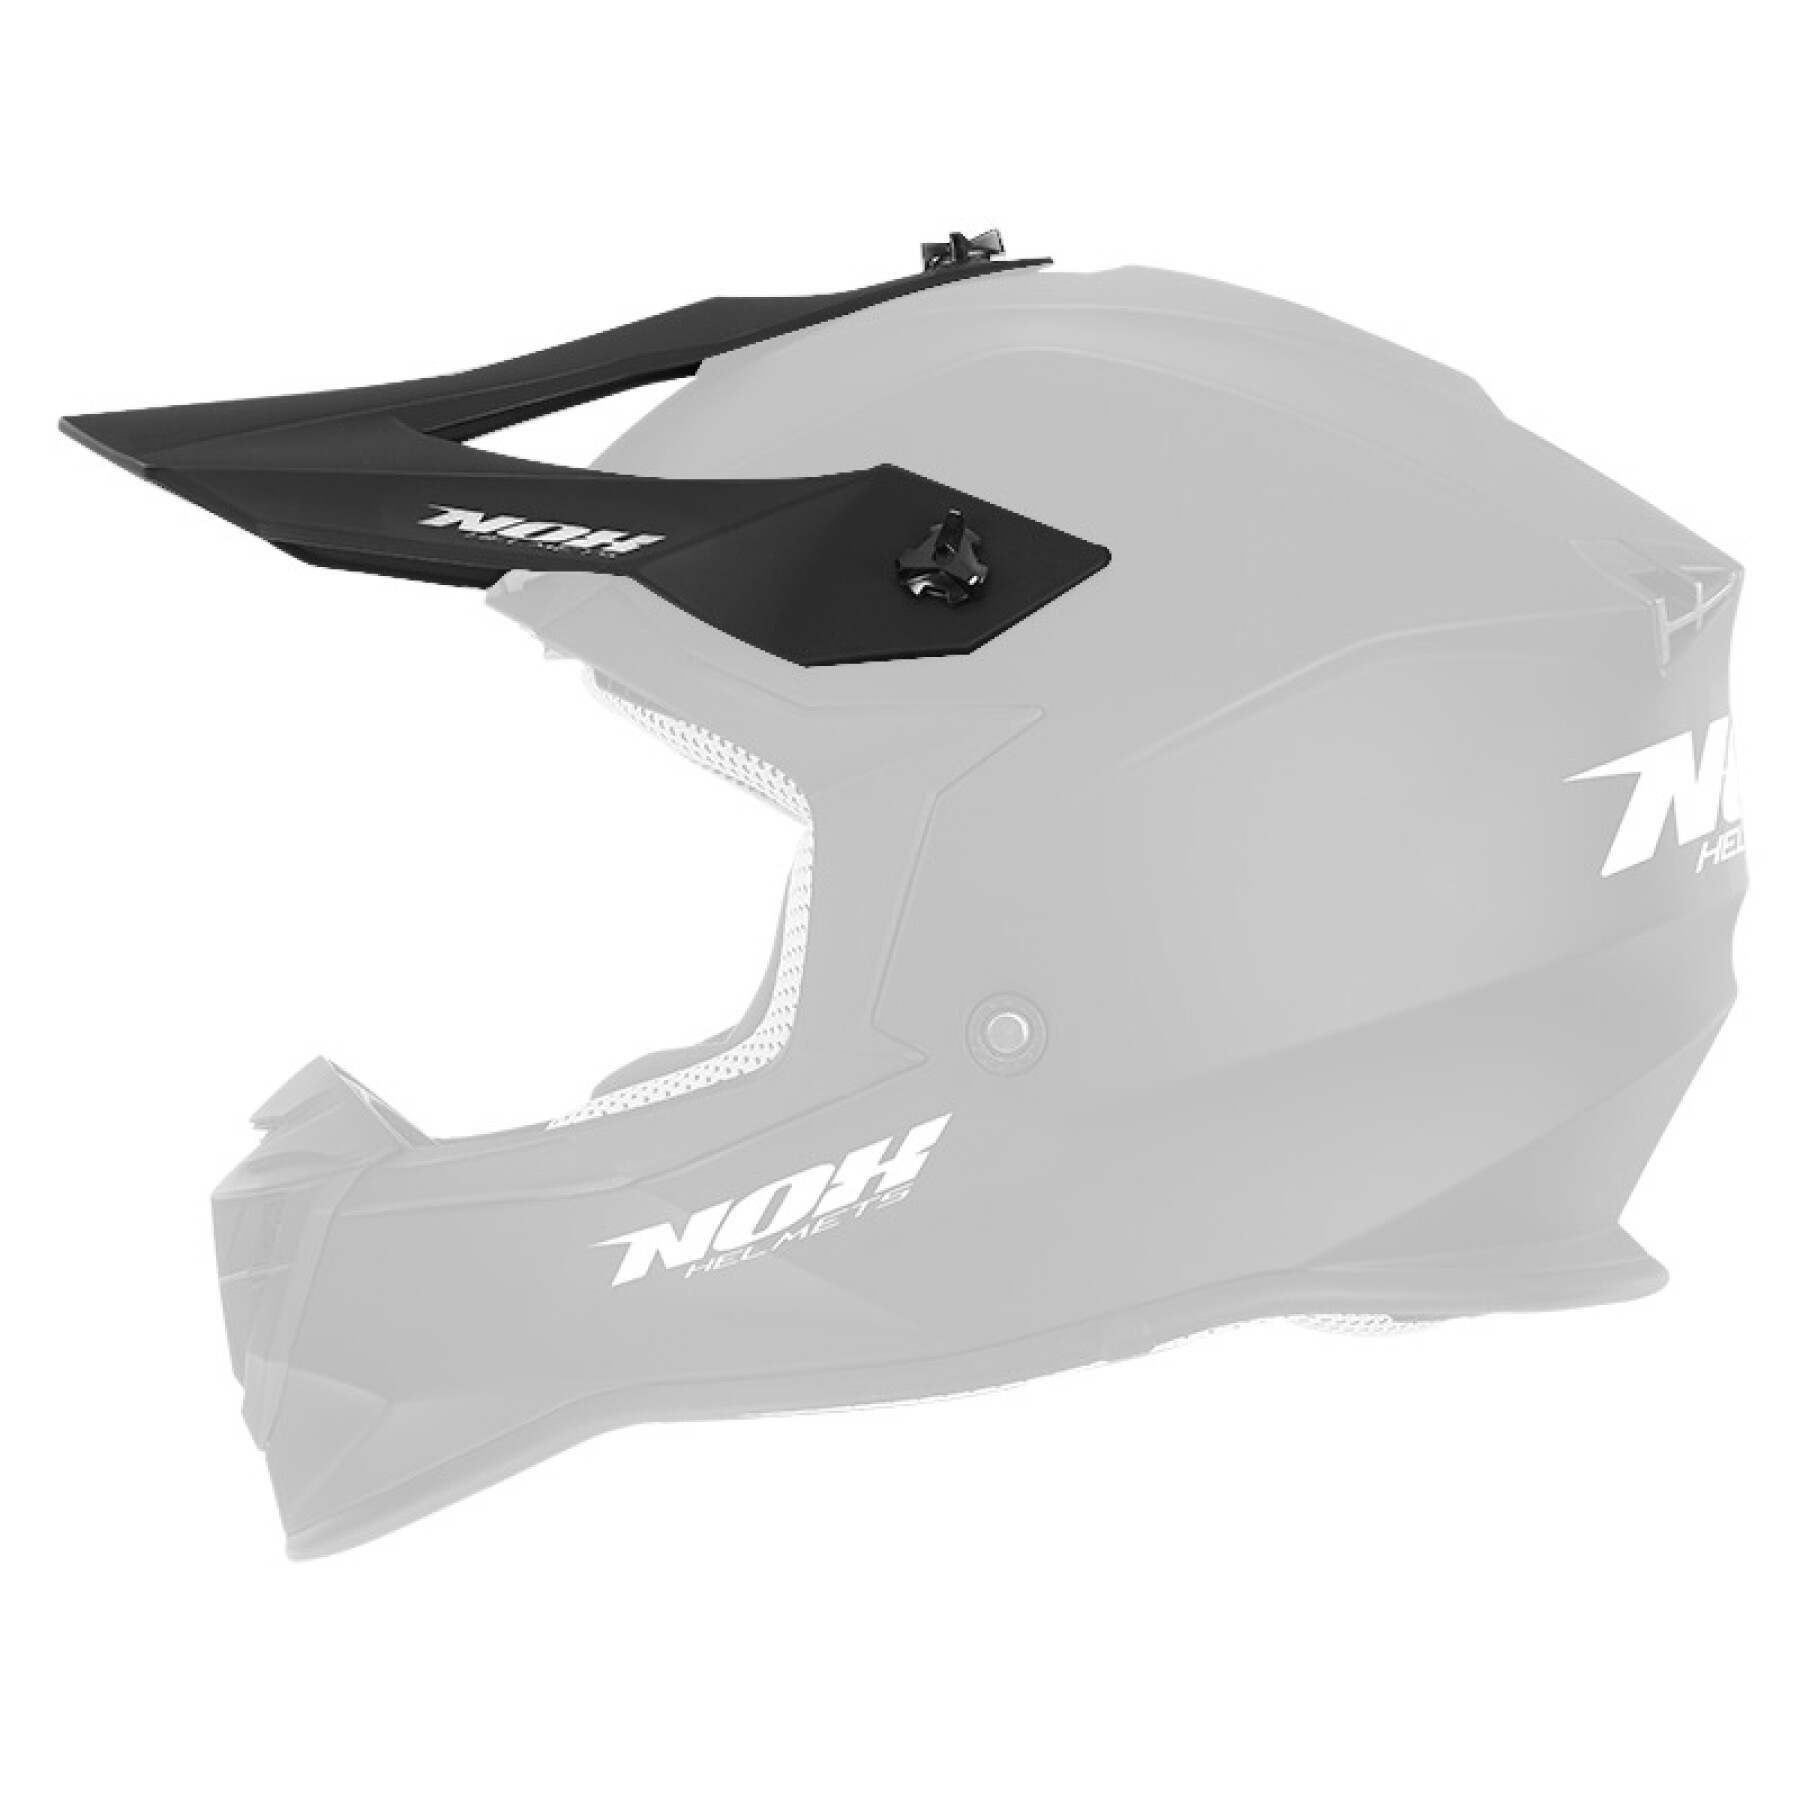 Visiera per casco da motocross Nox 633